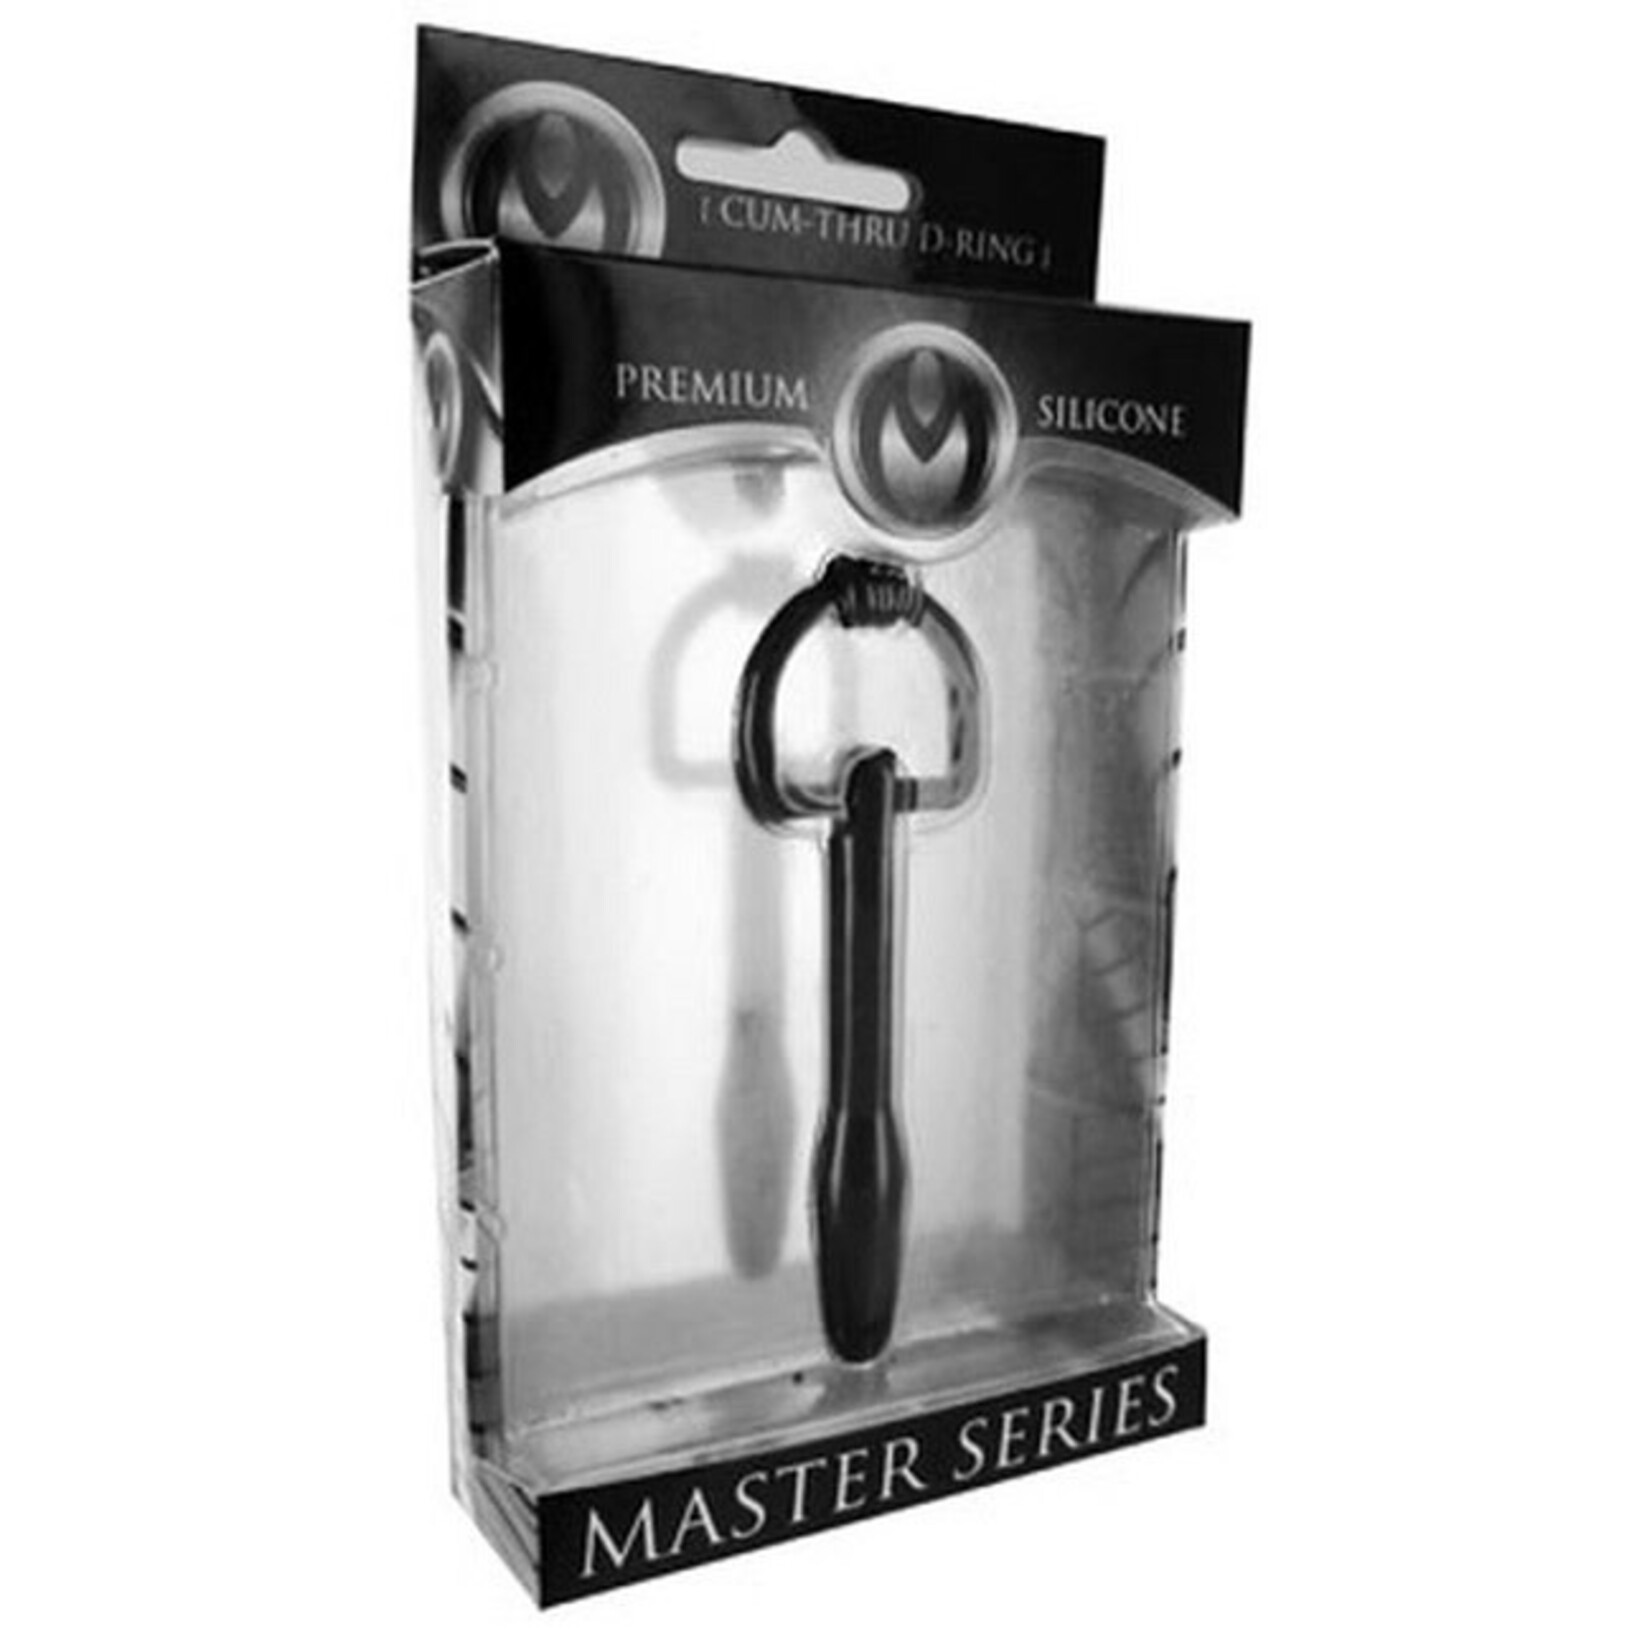 Master Series Master Series The Hallows Silicone Cum-Thru D-Ring Penis Plug